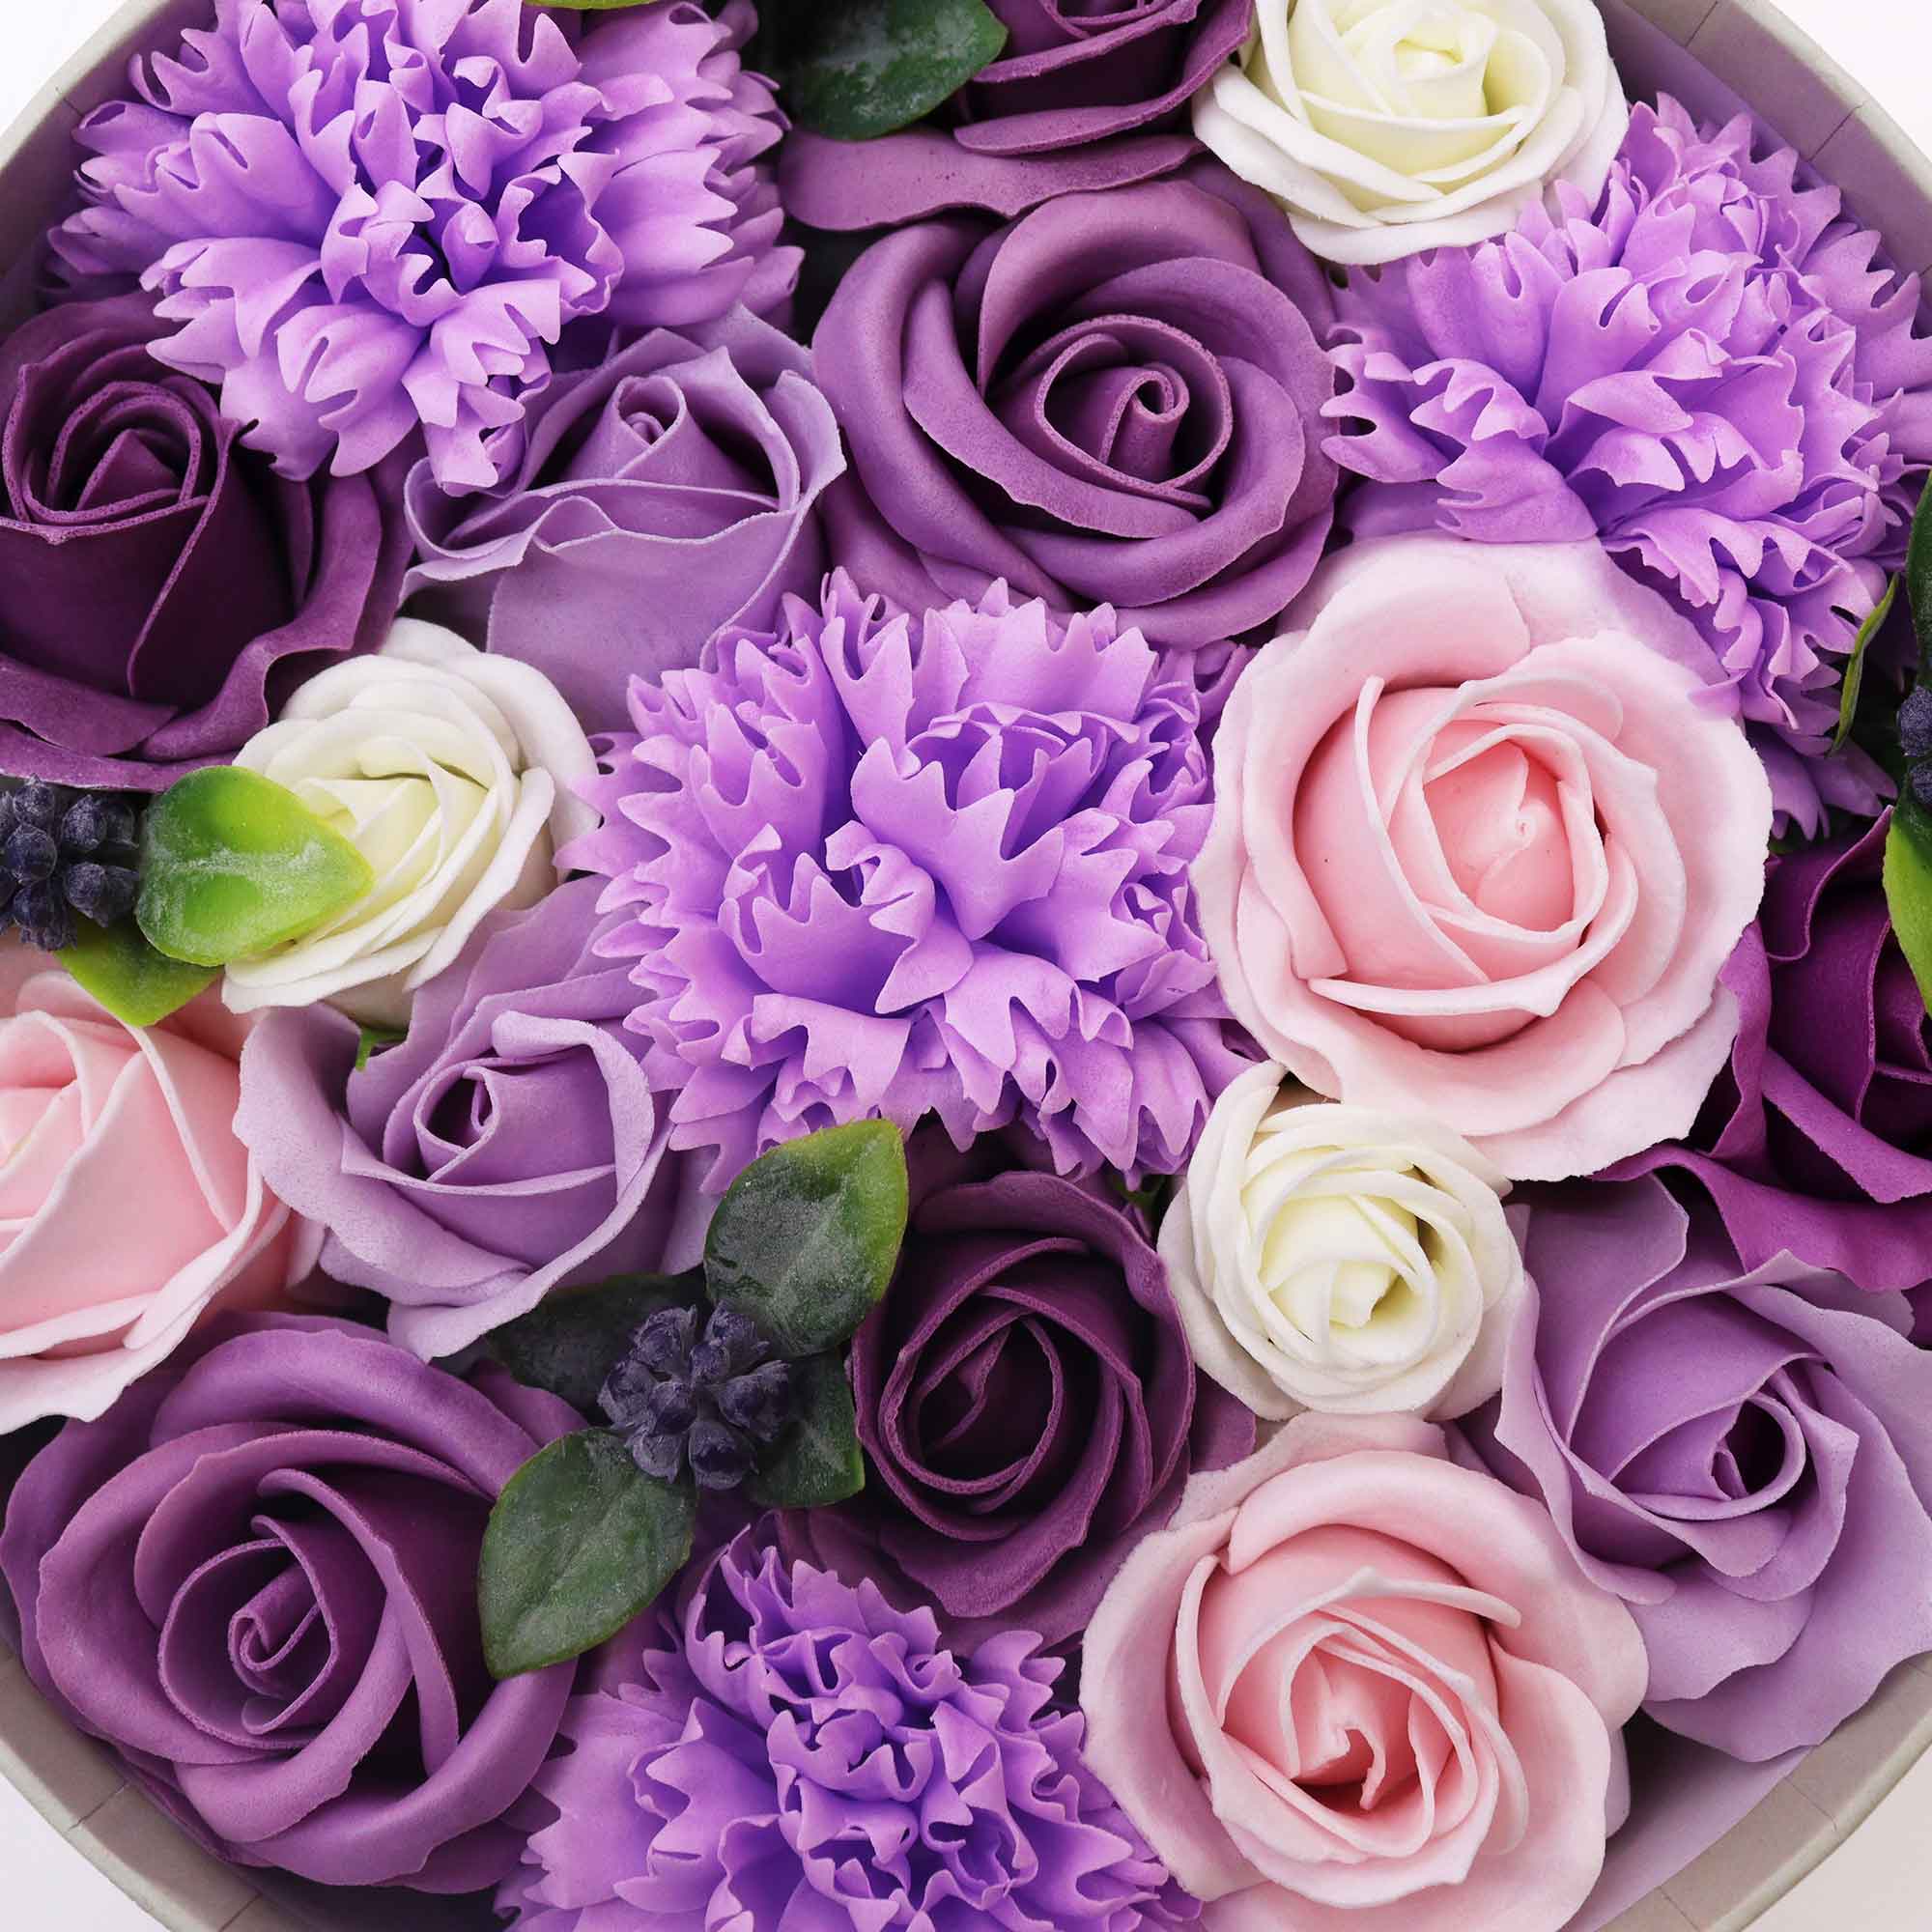 Merci Bouquet Soap Flowers Round Box - Lavender Rose & Carnation